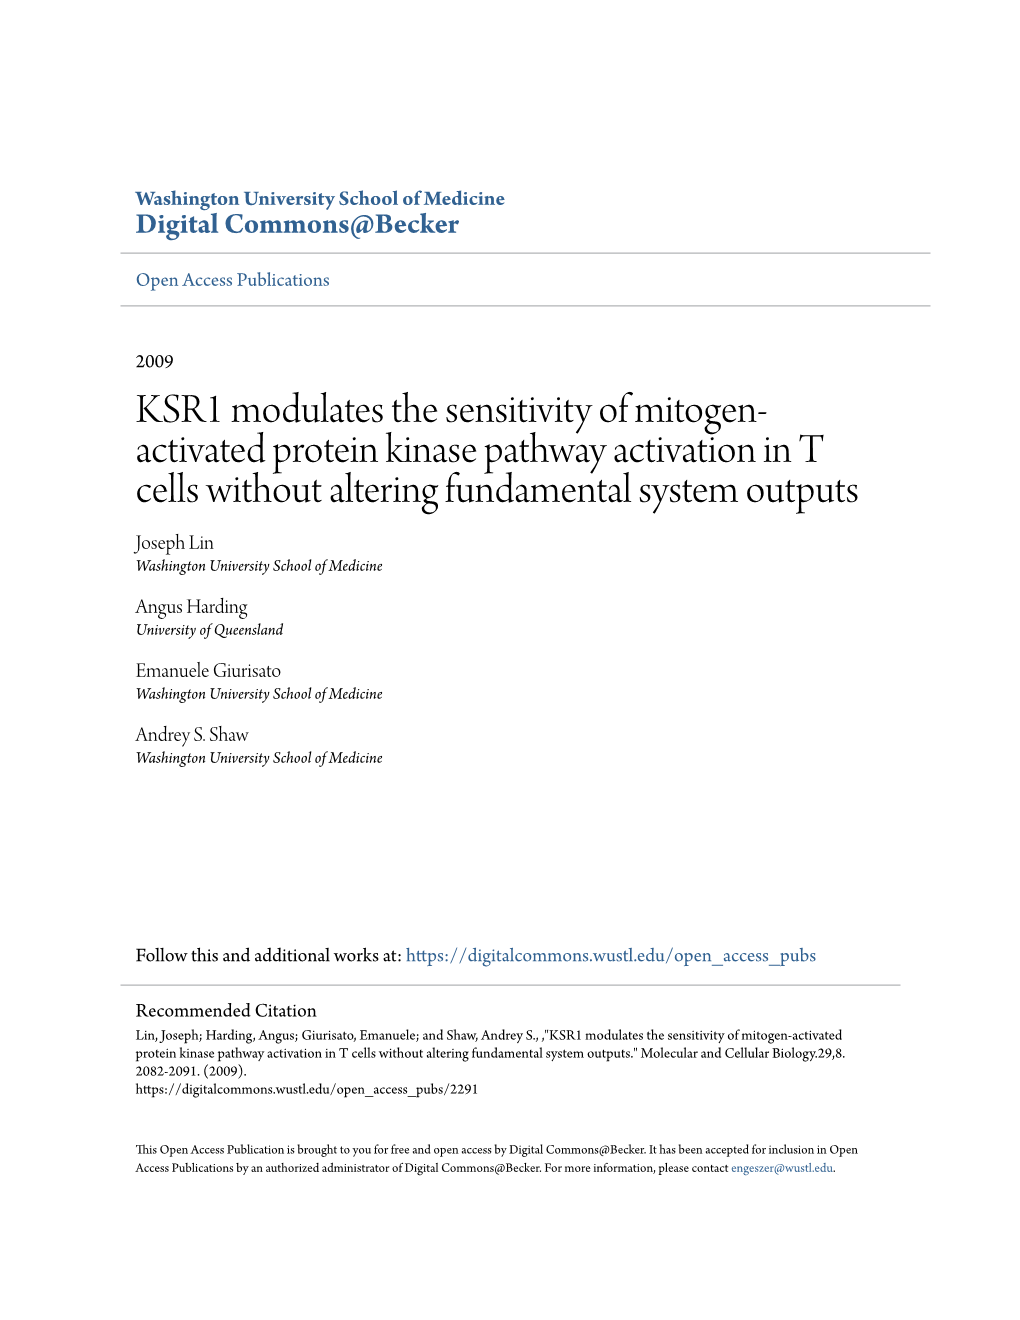 KSR1 Modulates the Sensitivity of Mitogen-Activated Protein Kinase